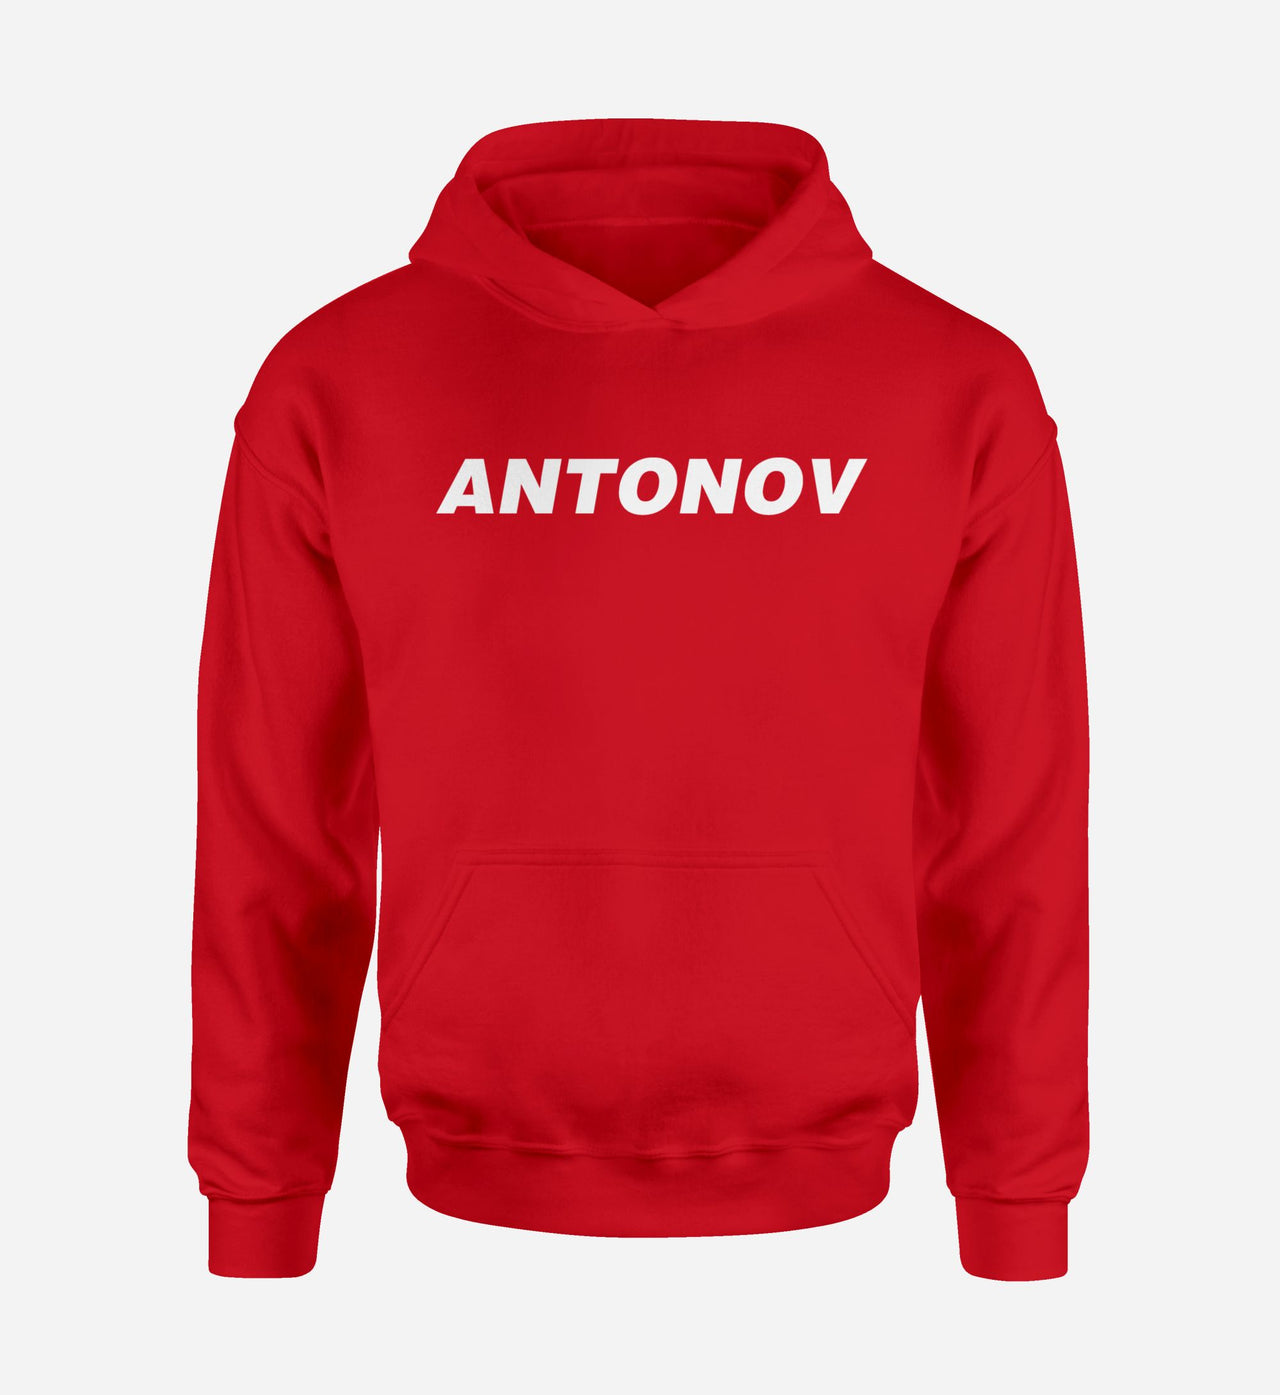 Antonov & Text Designed Hoodies